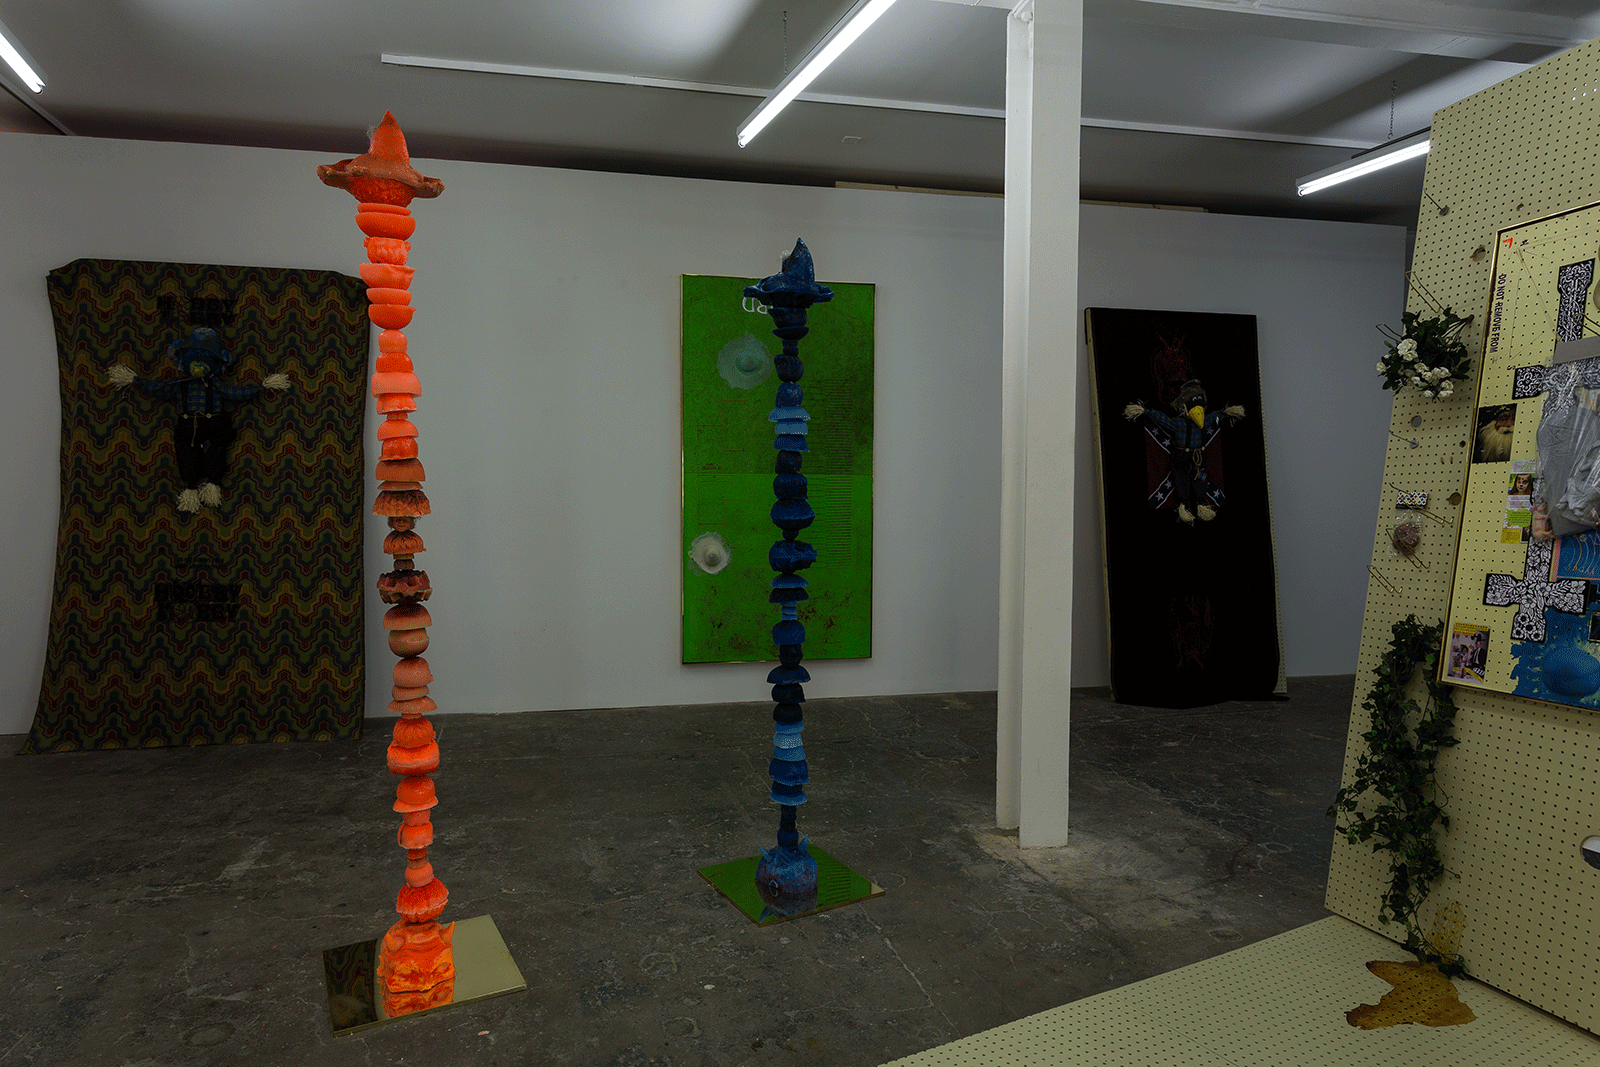 Stephen G. Rhodes, The Eleventh Hobby, 2014, Installation view. The Eleventh Hobby
, Stephen G. Rhodes